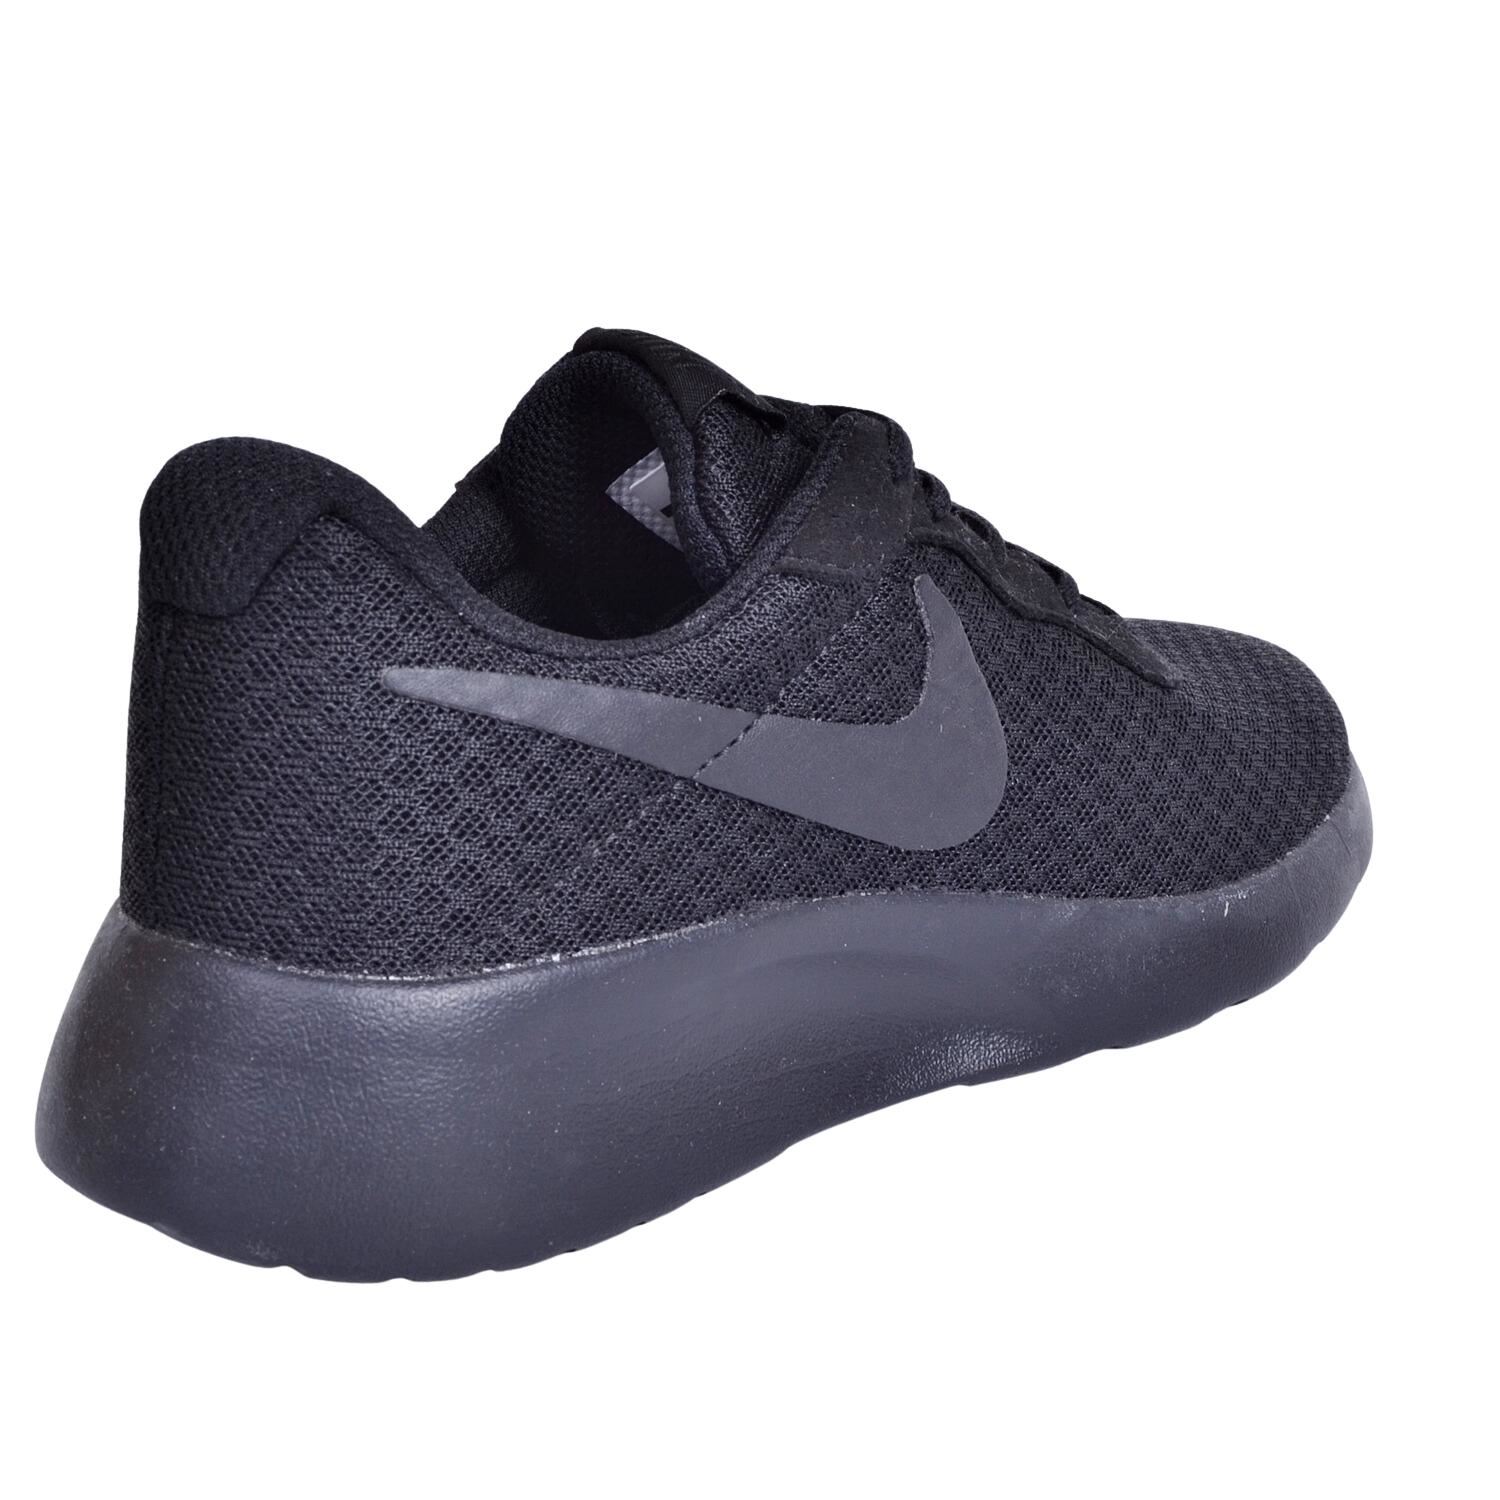 Nike 812655-010 Tanjun Siyah Spor Ayakkabı